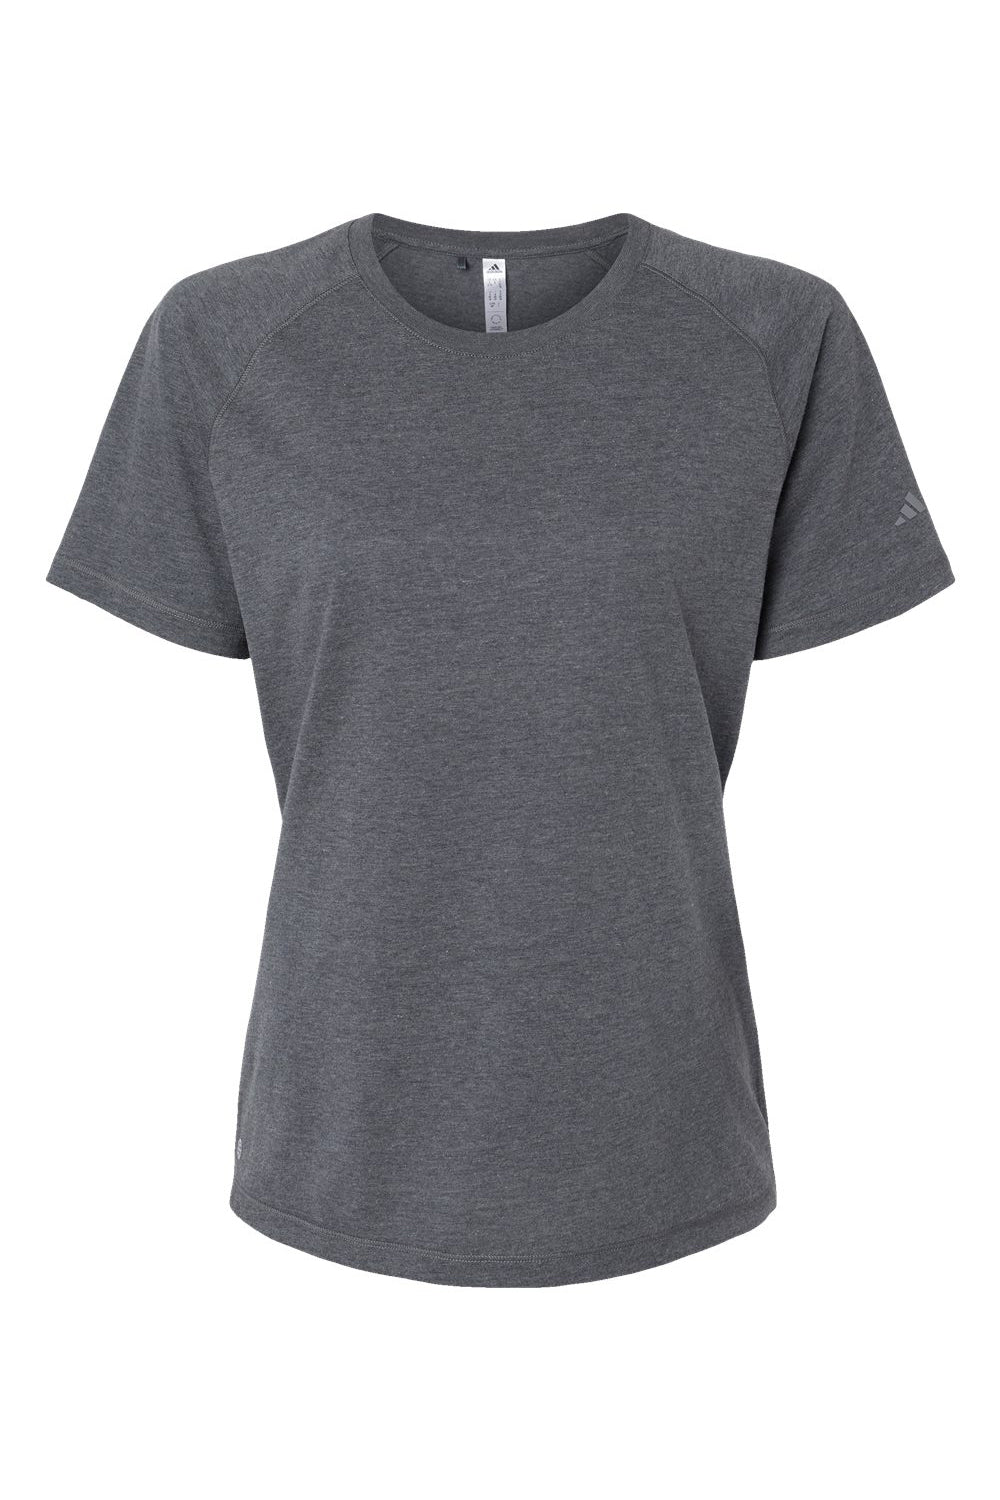 Adidas A557 Womens Short Sleeve Crewneck T-Shirt Heather Dark Grey Flat Front